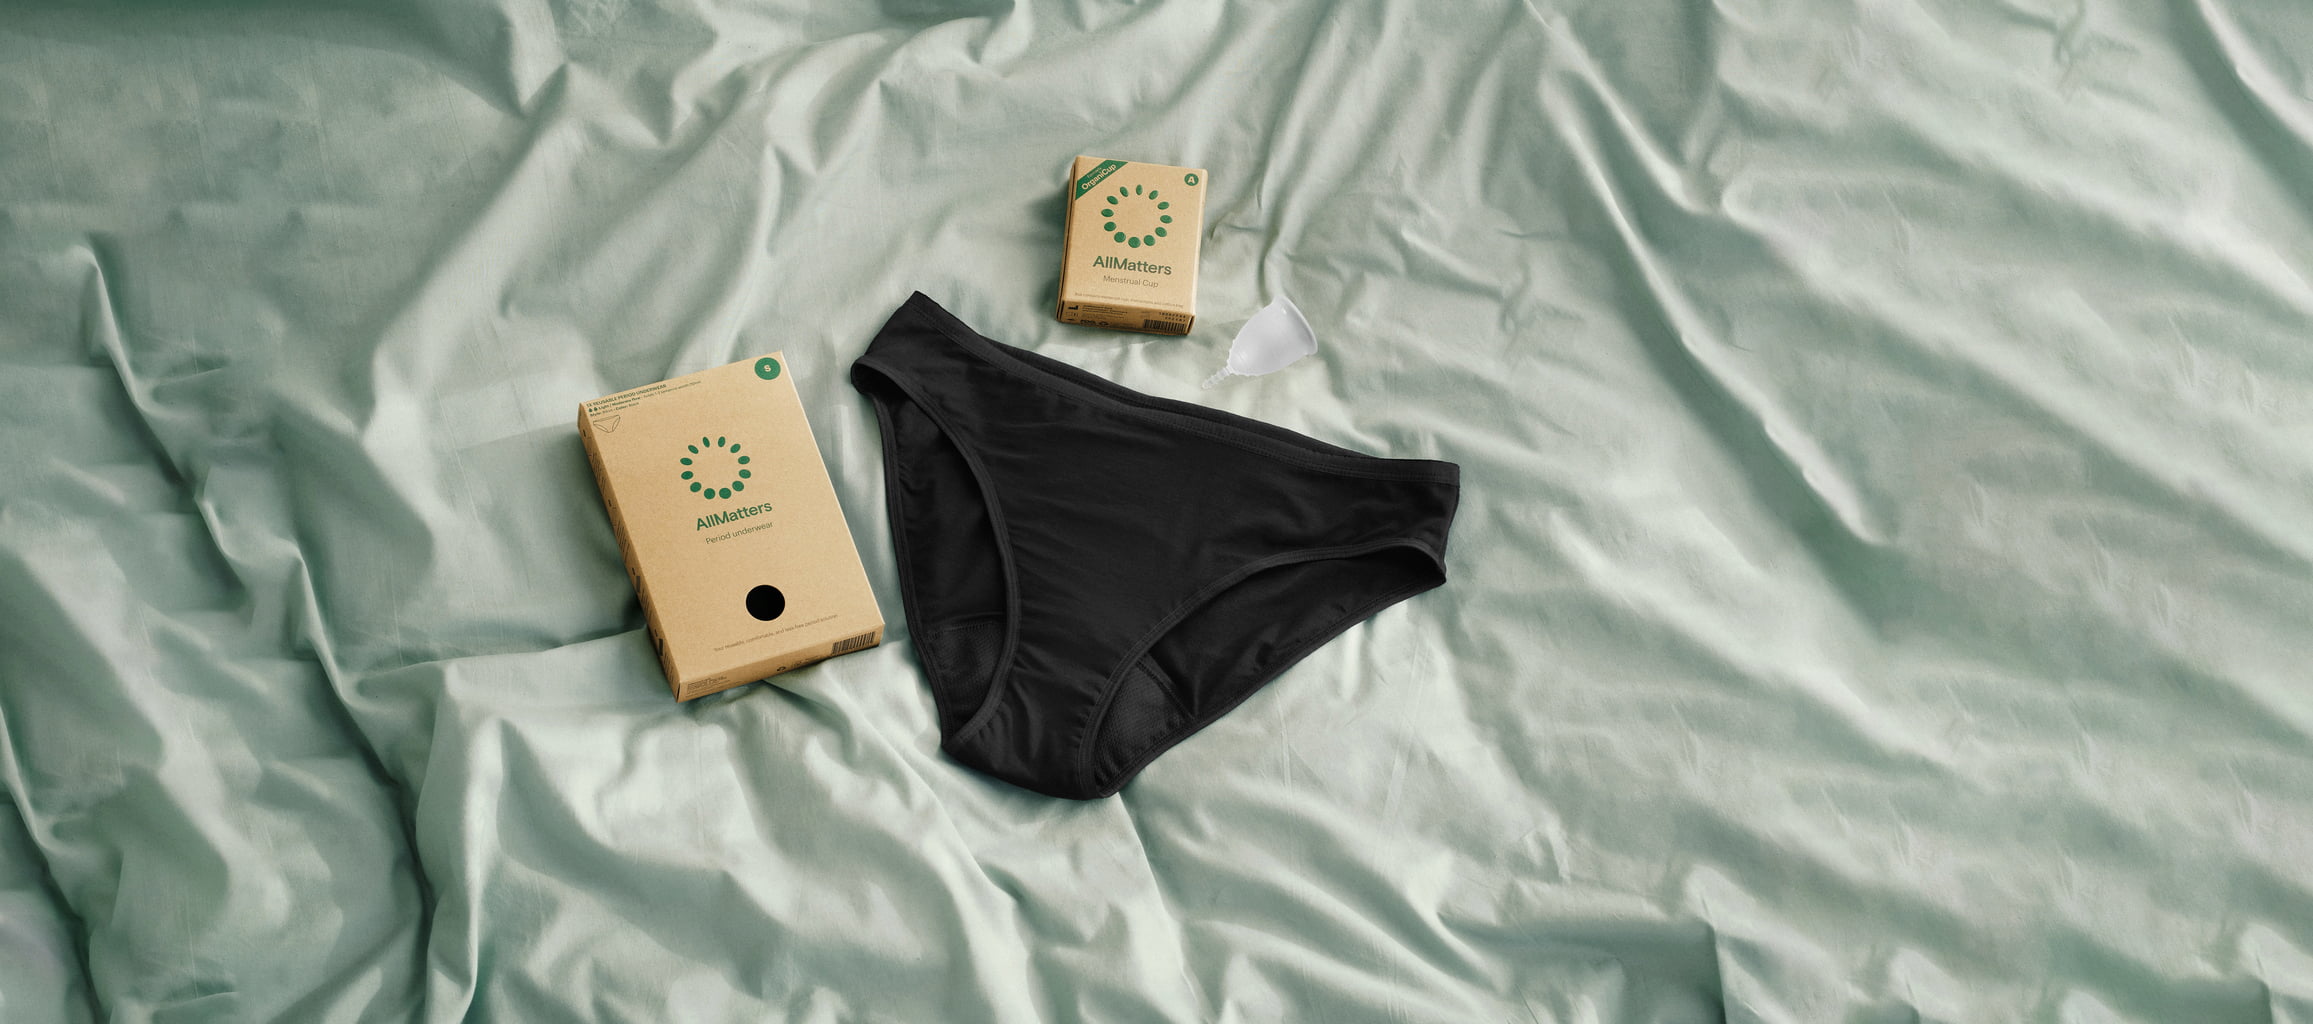 Classic black period bikini period panties for swimming menstrual underwear  menstrual panties for heavy flow leak proof underwear Archives - Hey Girls